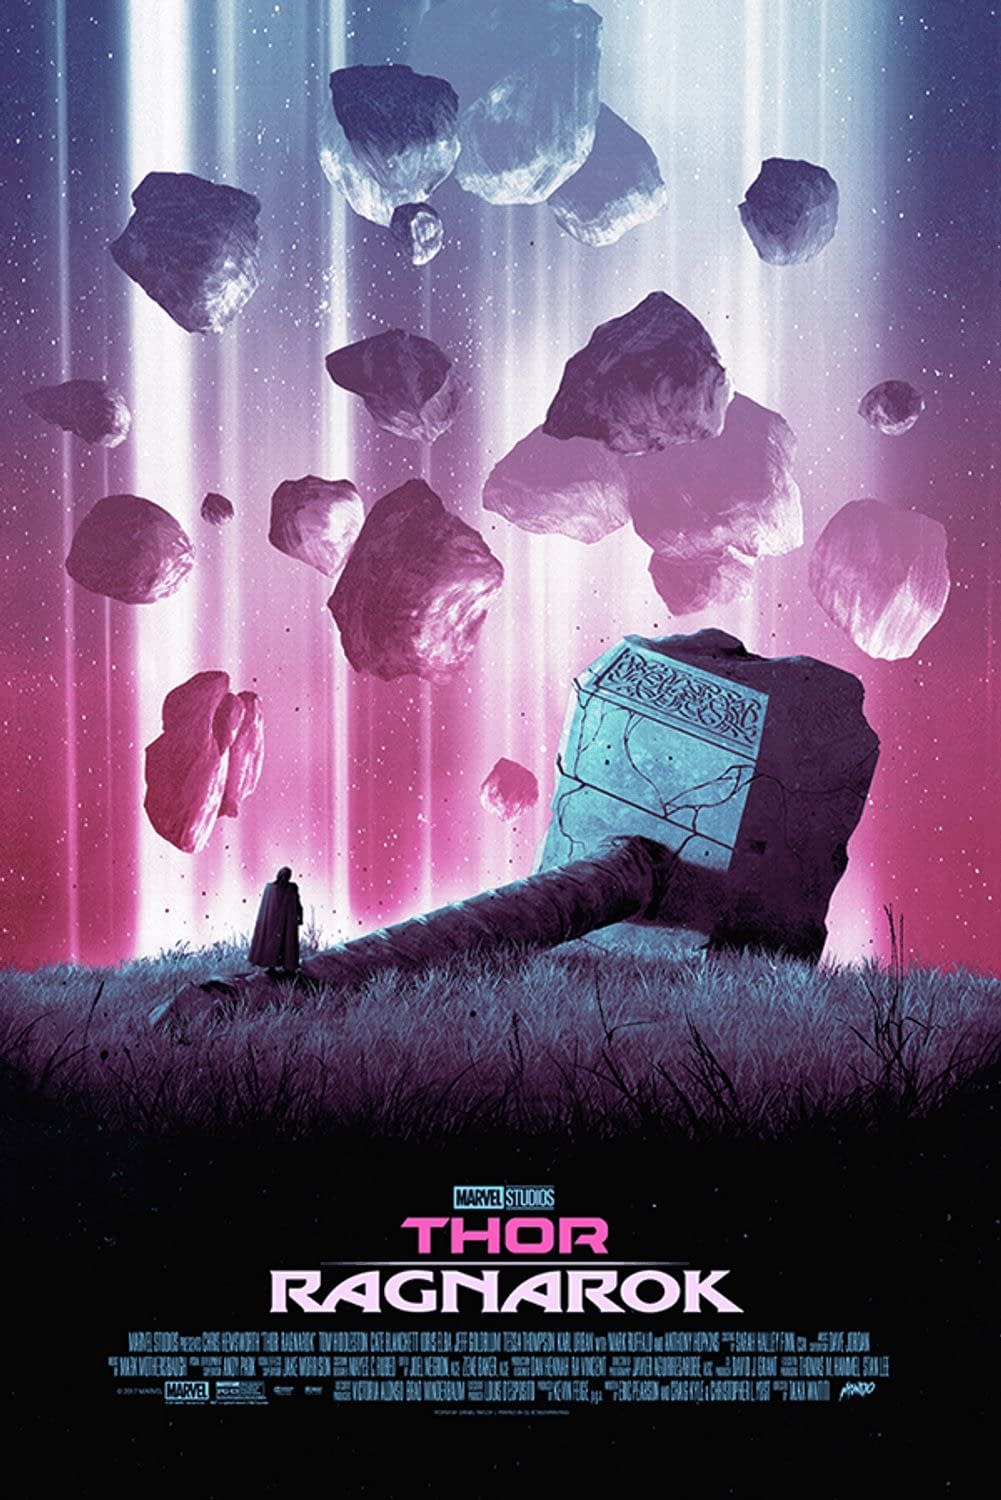 https://mlpnk72yciwc.i.optimole.com/cqhiHLc.IIZS~2ef73/w:auto/h:auto/q:75/https://bleedingcool.com/wp-content/uploads/2020/05/Thor-Ragnarok-poster.-Credit-Mondo.jpg